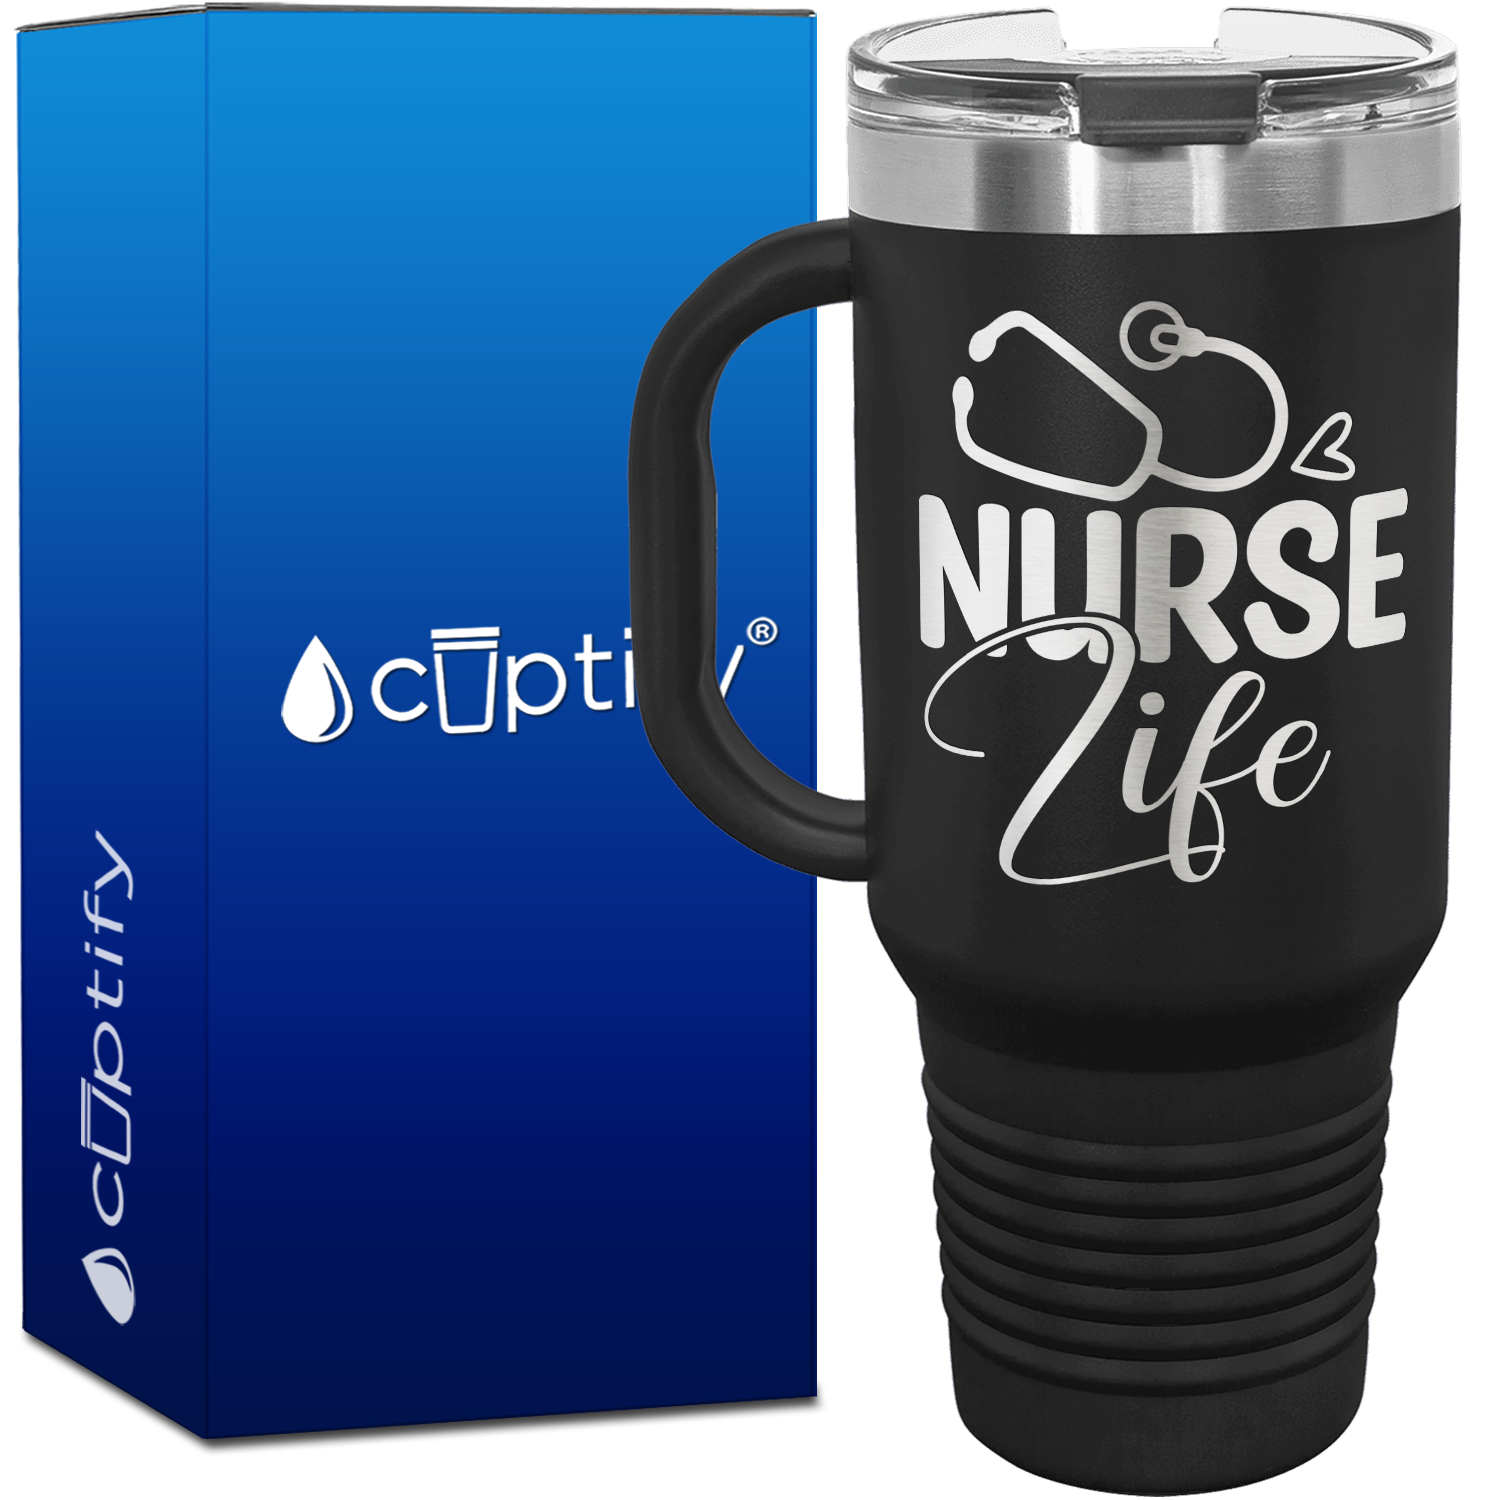 Nurse Life Stethoscope 40oz Nurse Travel Mug